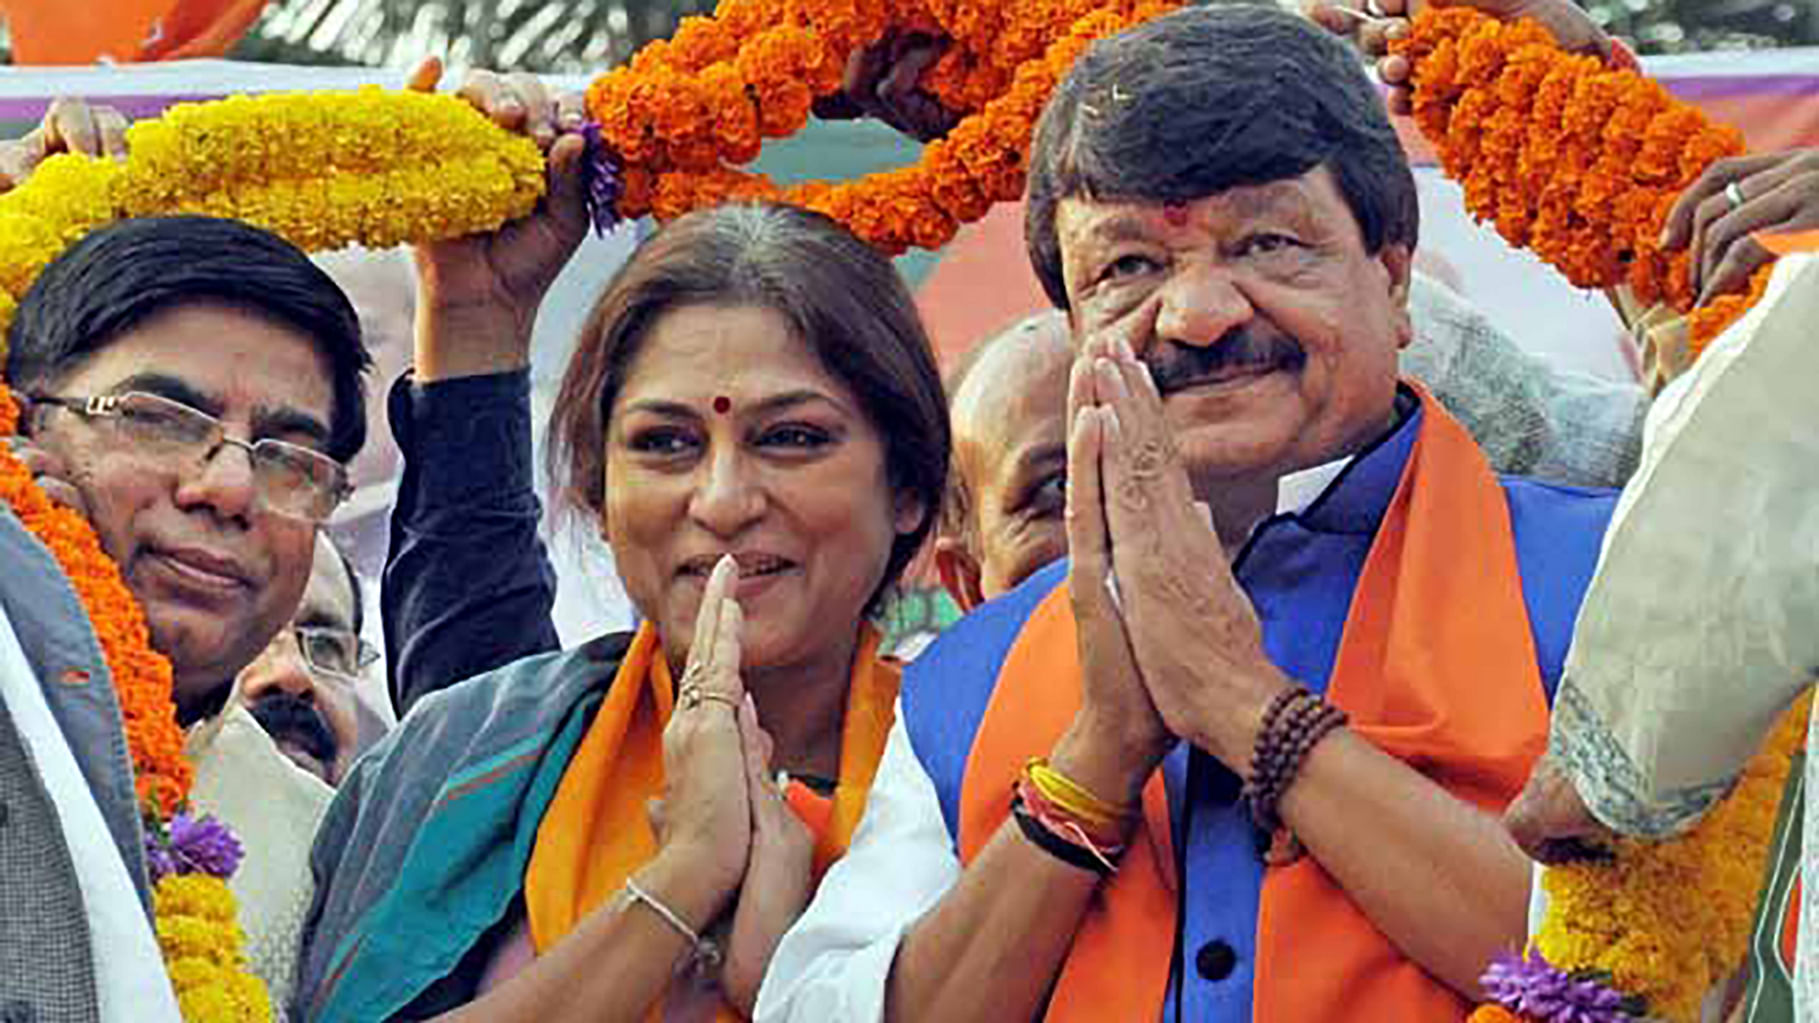 Senior BJP leader Kailash Vijayvargiya (left) with Rupa Ganguly, who was leading the march. (Photo: PTI)